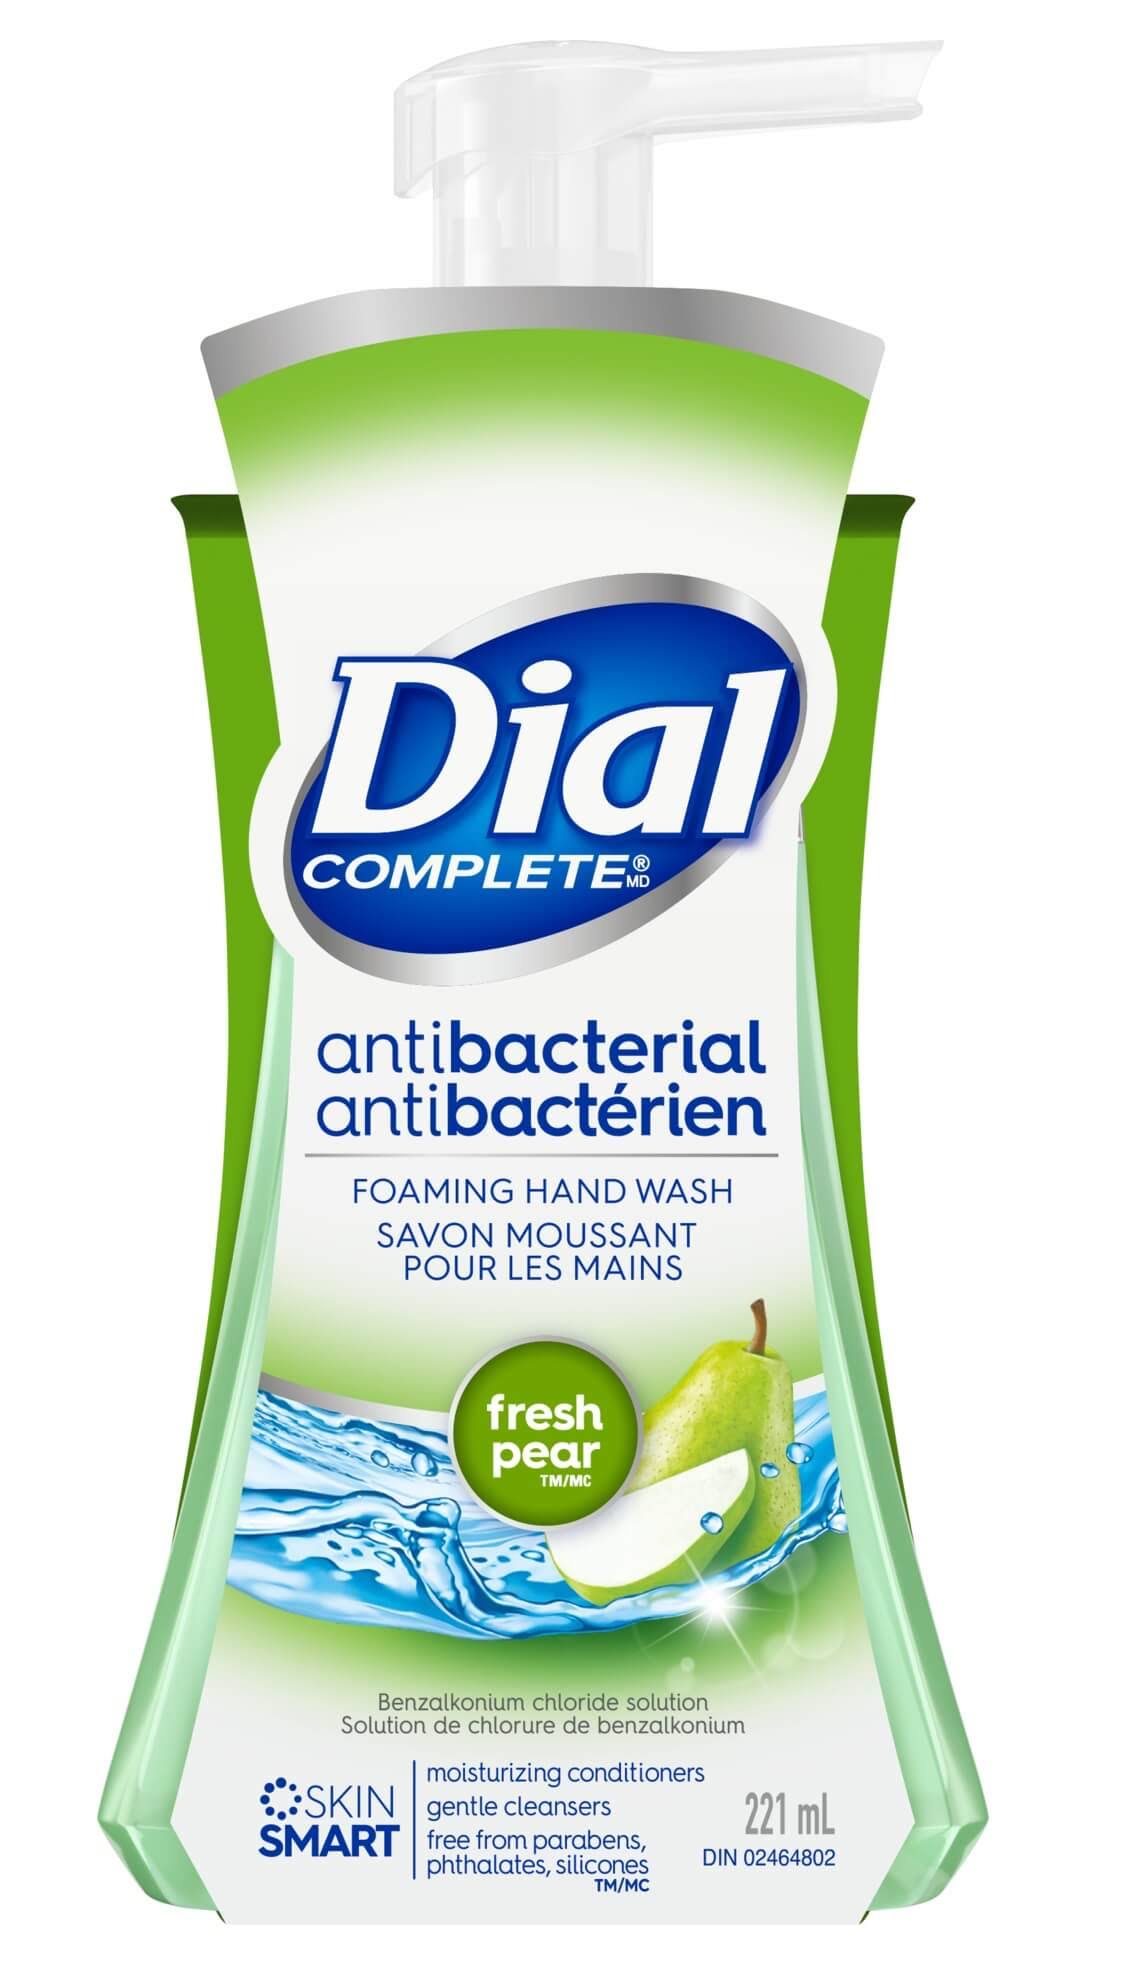 Dial Complete Antibacterial Foaming Hand Wash Pump, Fresh Pear, 221 ml